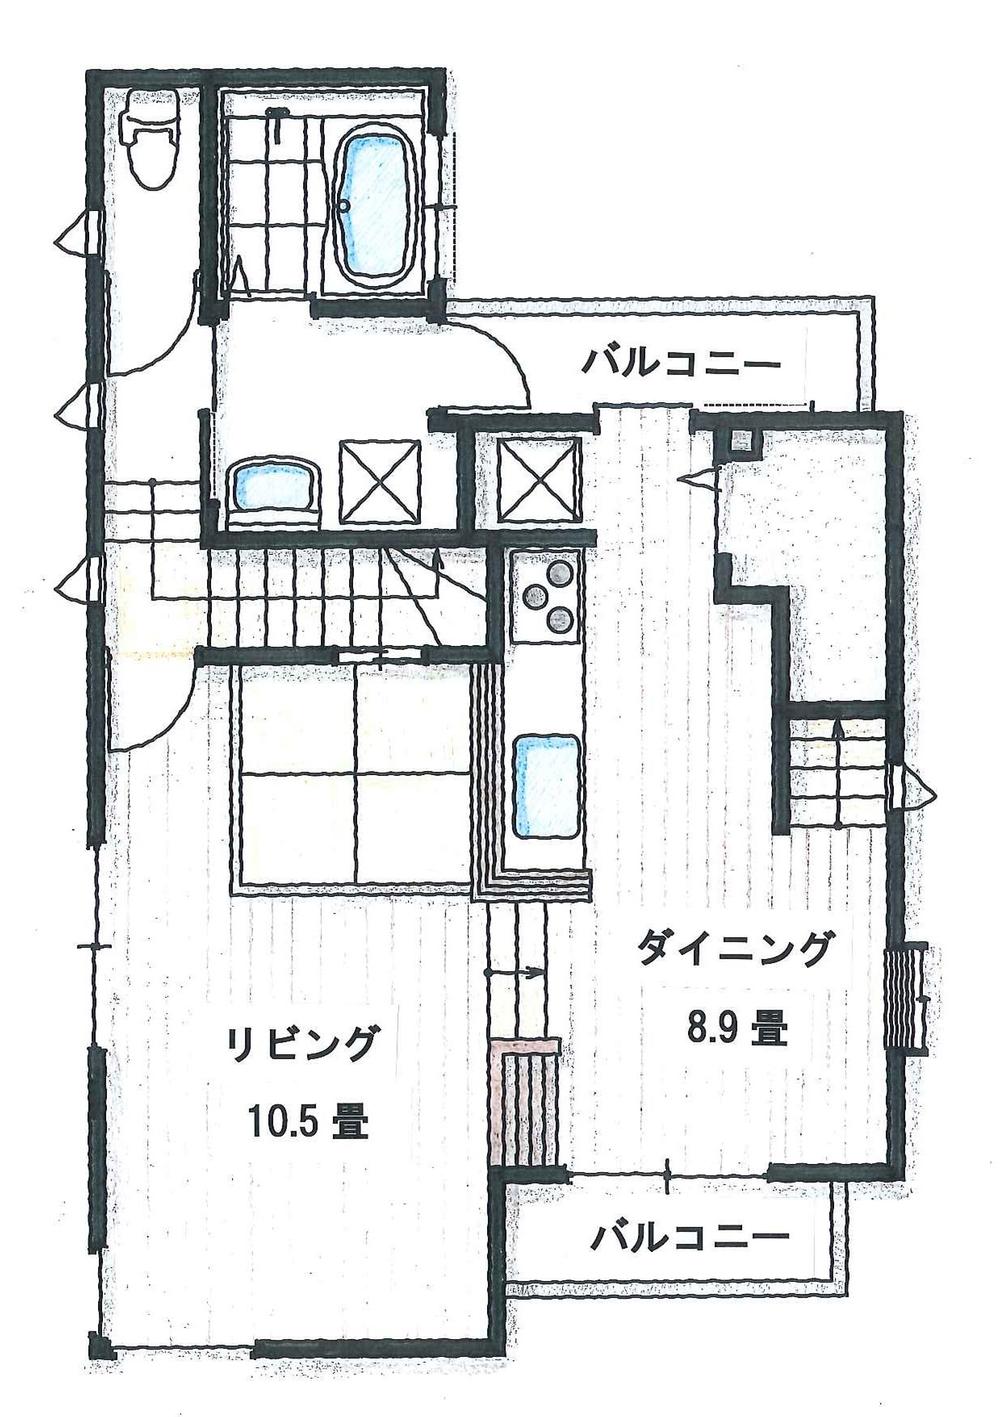 Floor plan. 29,800,000 yen, 4LDK + S (storeroom), Land area 97 sq m , Building area 141.37 sq m 2F plan view